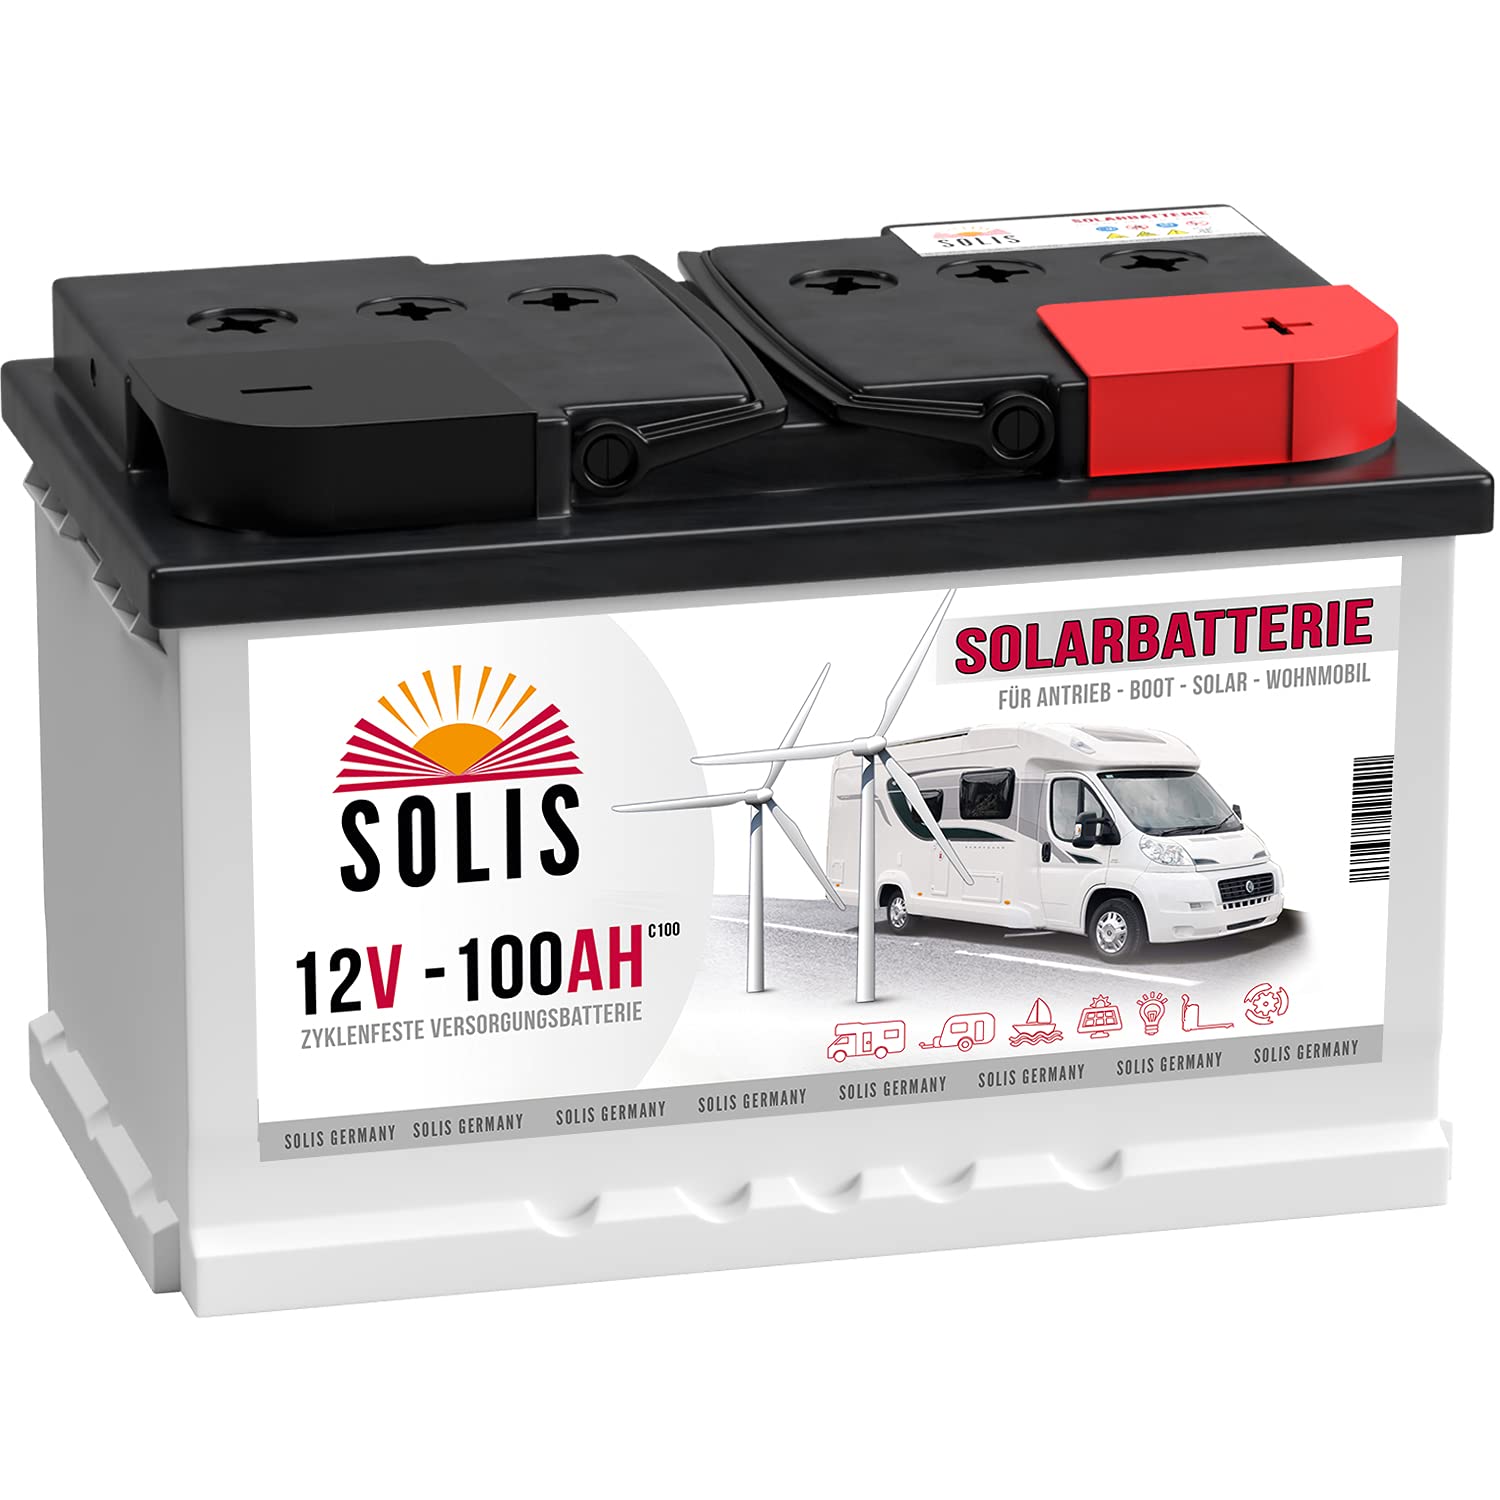 Solis Solarbatterie 100AH 12V Antriebs Versorgungs Boots Wohnmobil Solar Caravan Batterie … von SOLIS Batterien